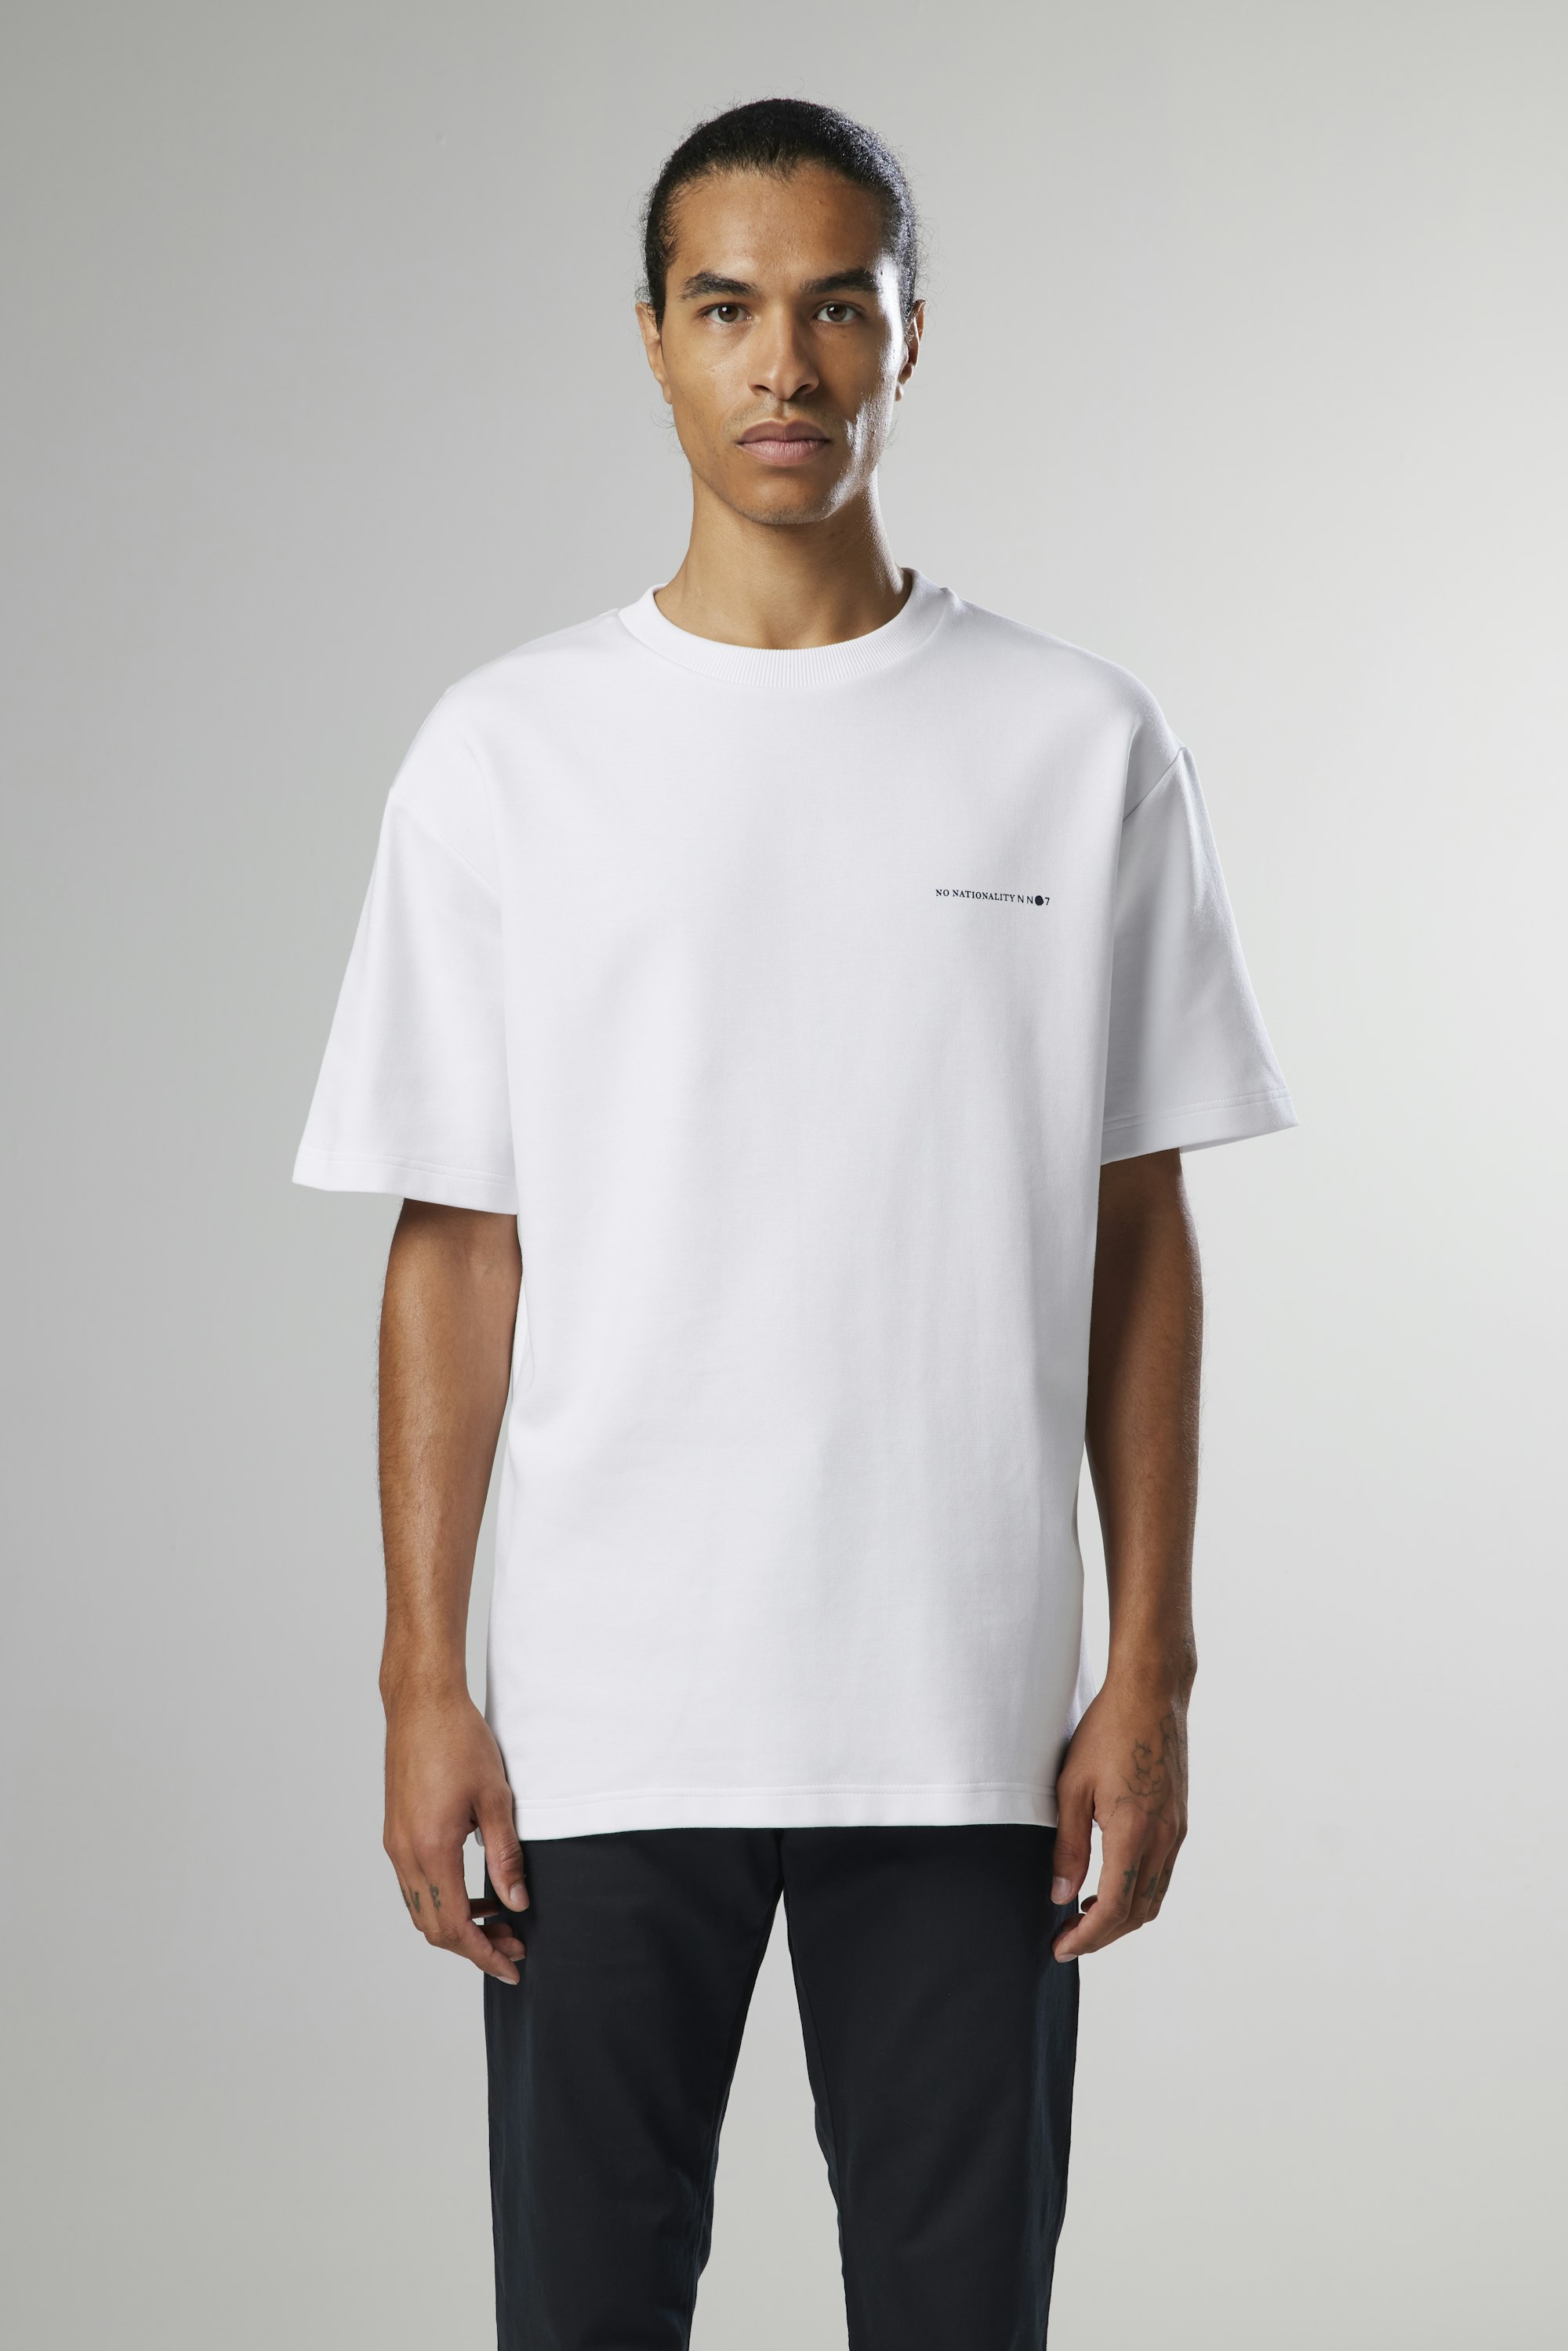 lette melodi hestekræfter Nat 3457 men's t-shirt - White - Buy online at NN07®